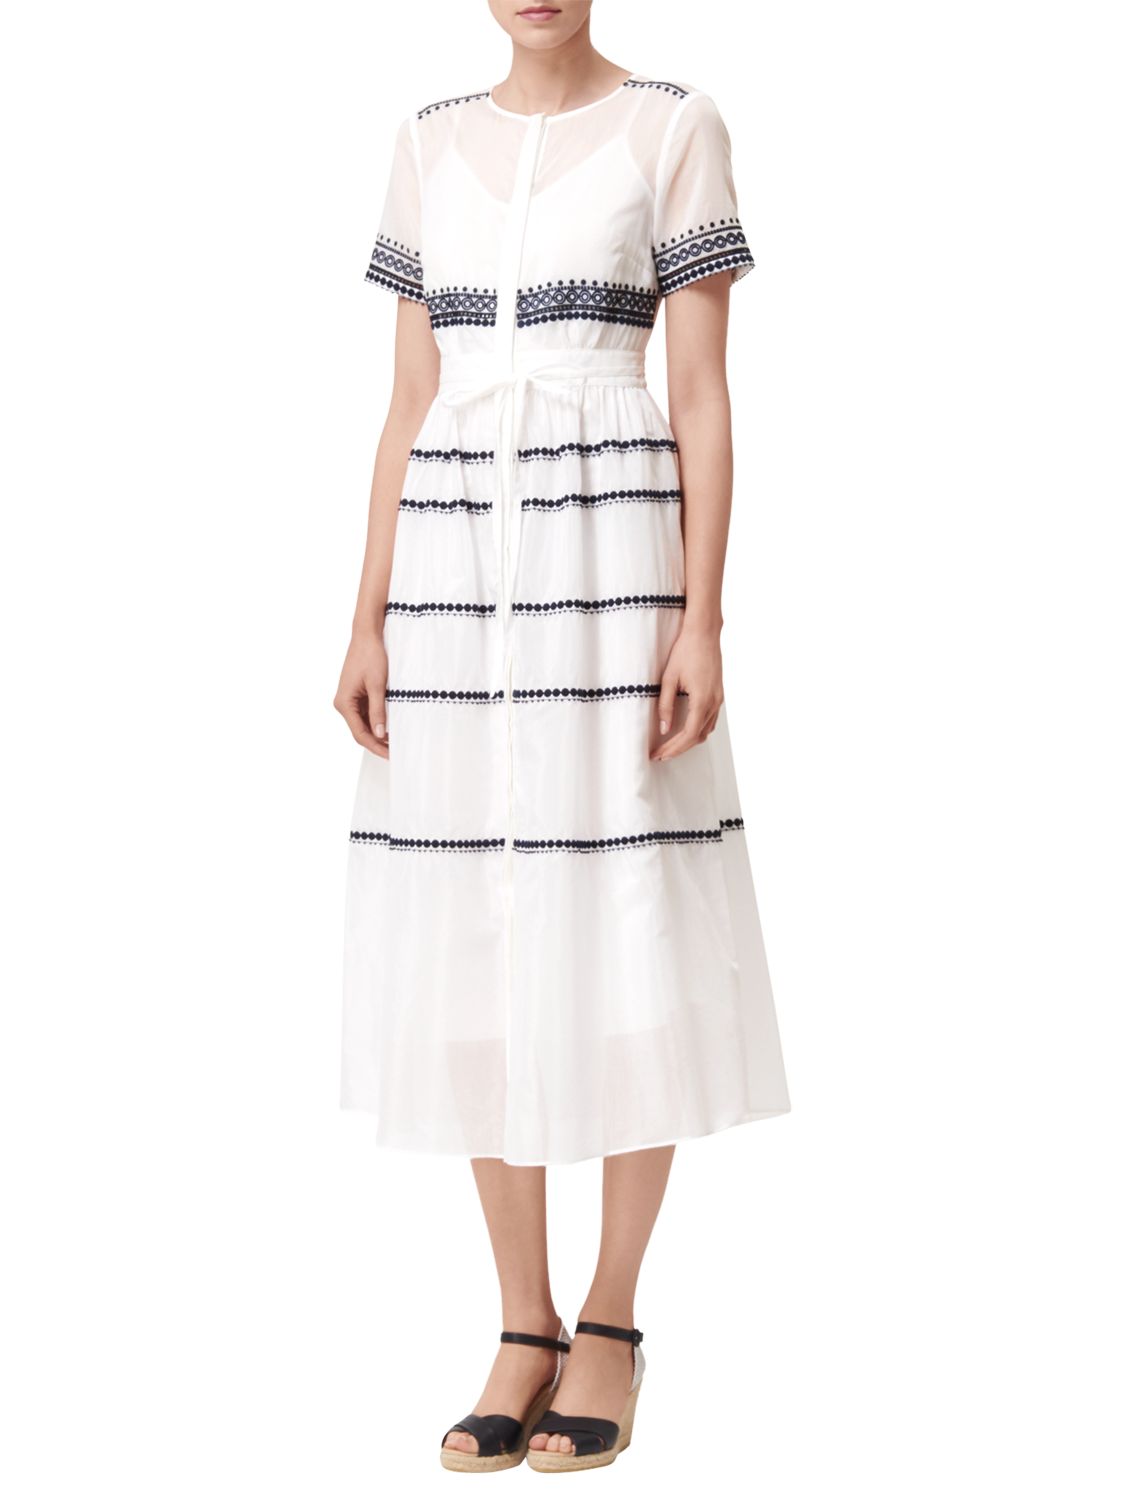 L.K. Bennett Tarley Embroidered Dress, Cream, 6